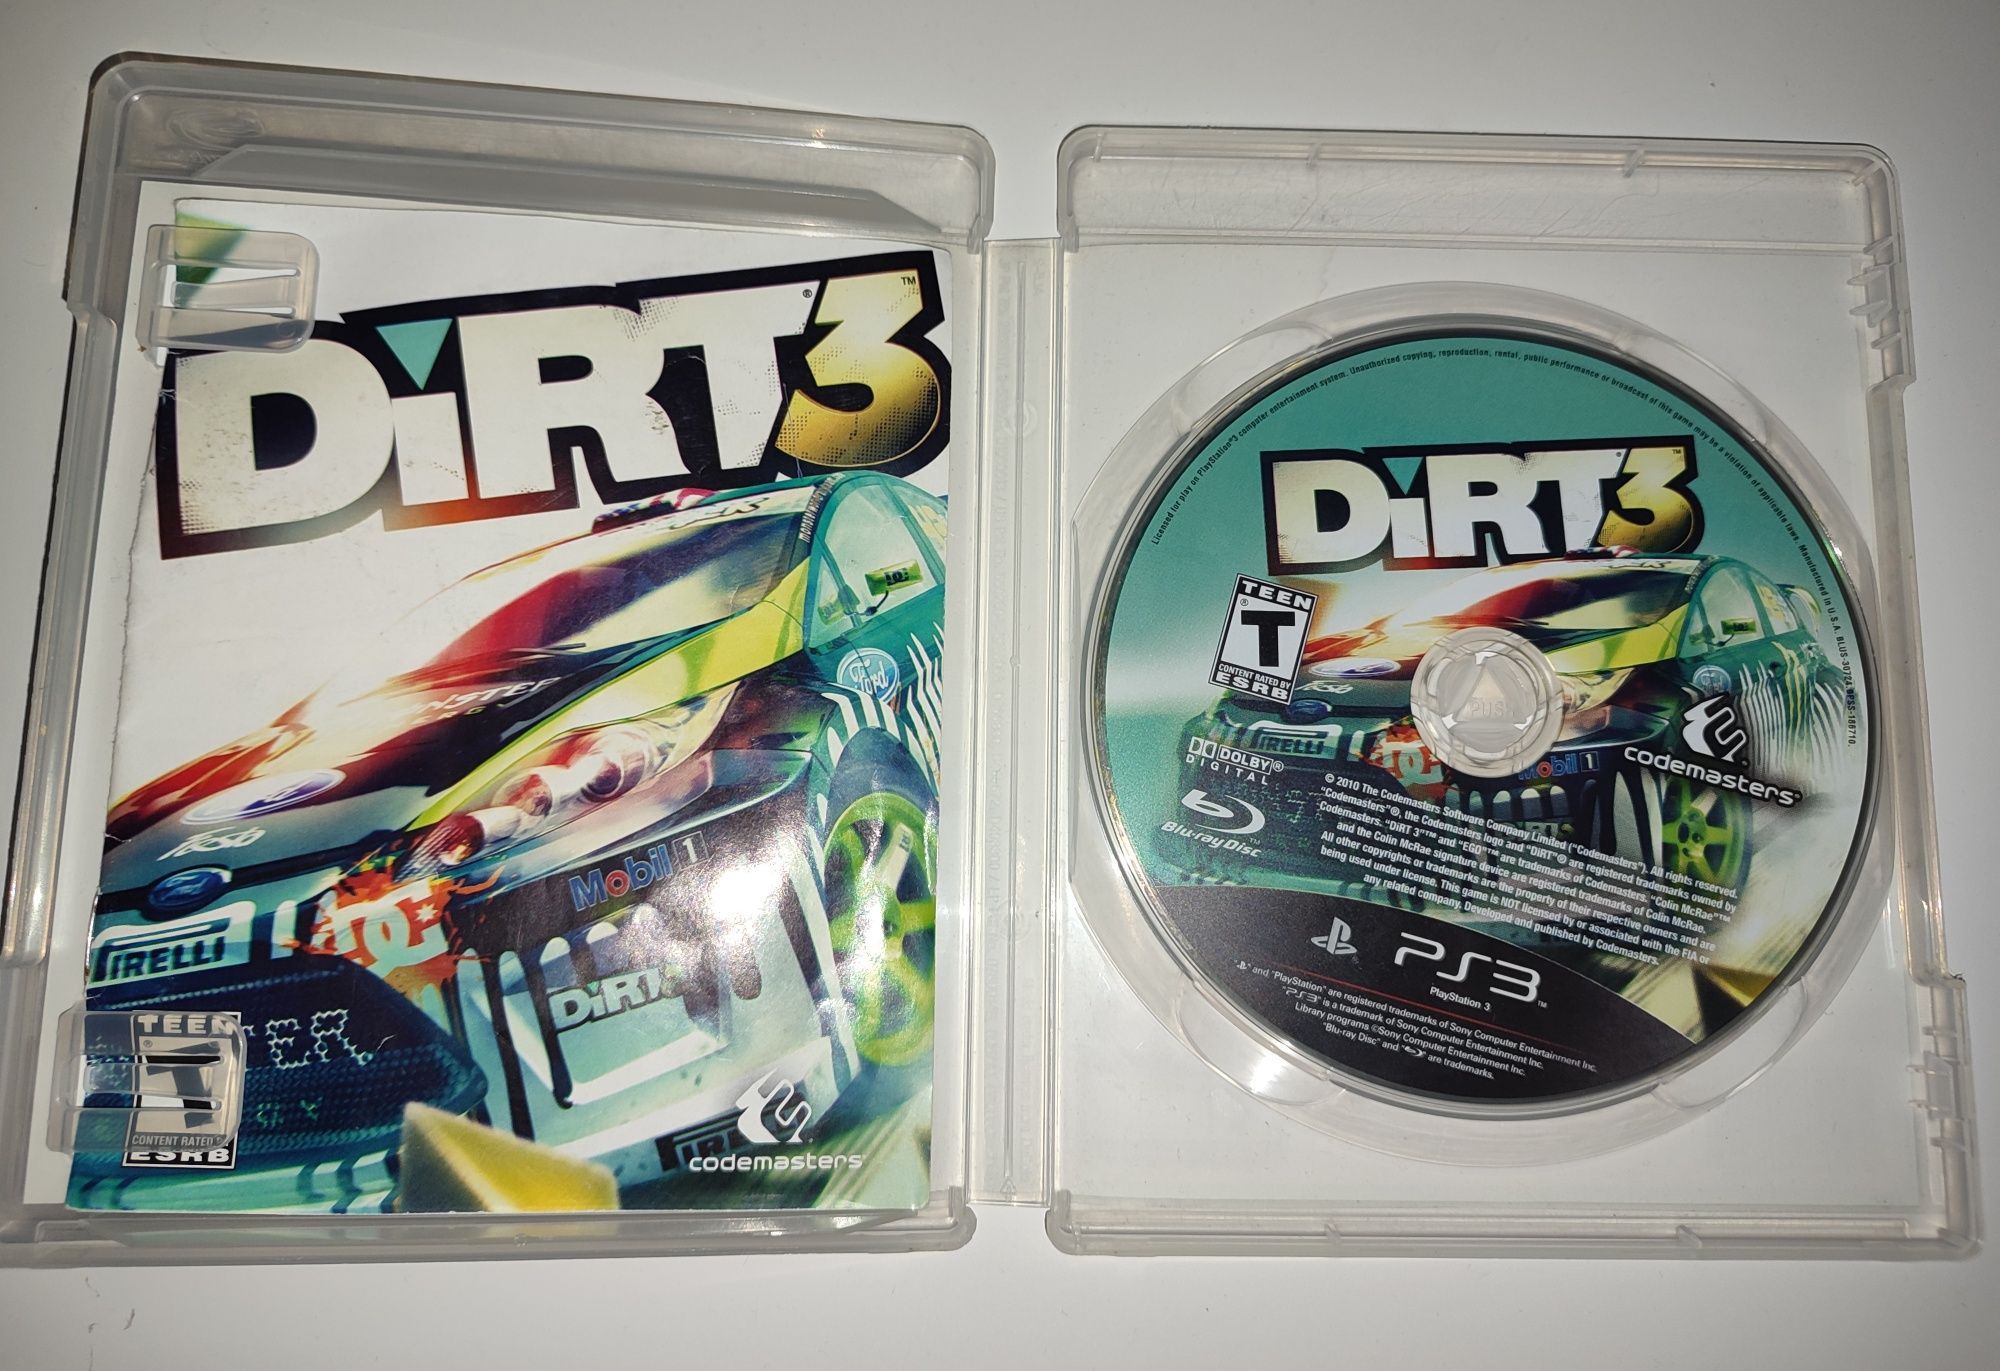 Gra Ps3 Dirt 3 III Dirt3 gry PlayStation 3 wyścigi aut NFS Mafia UFC